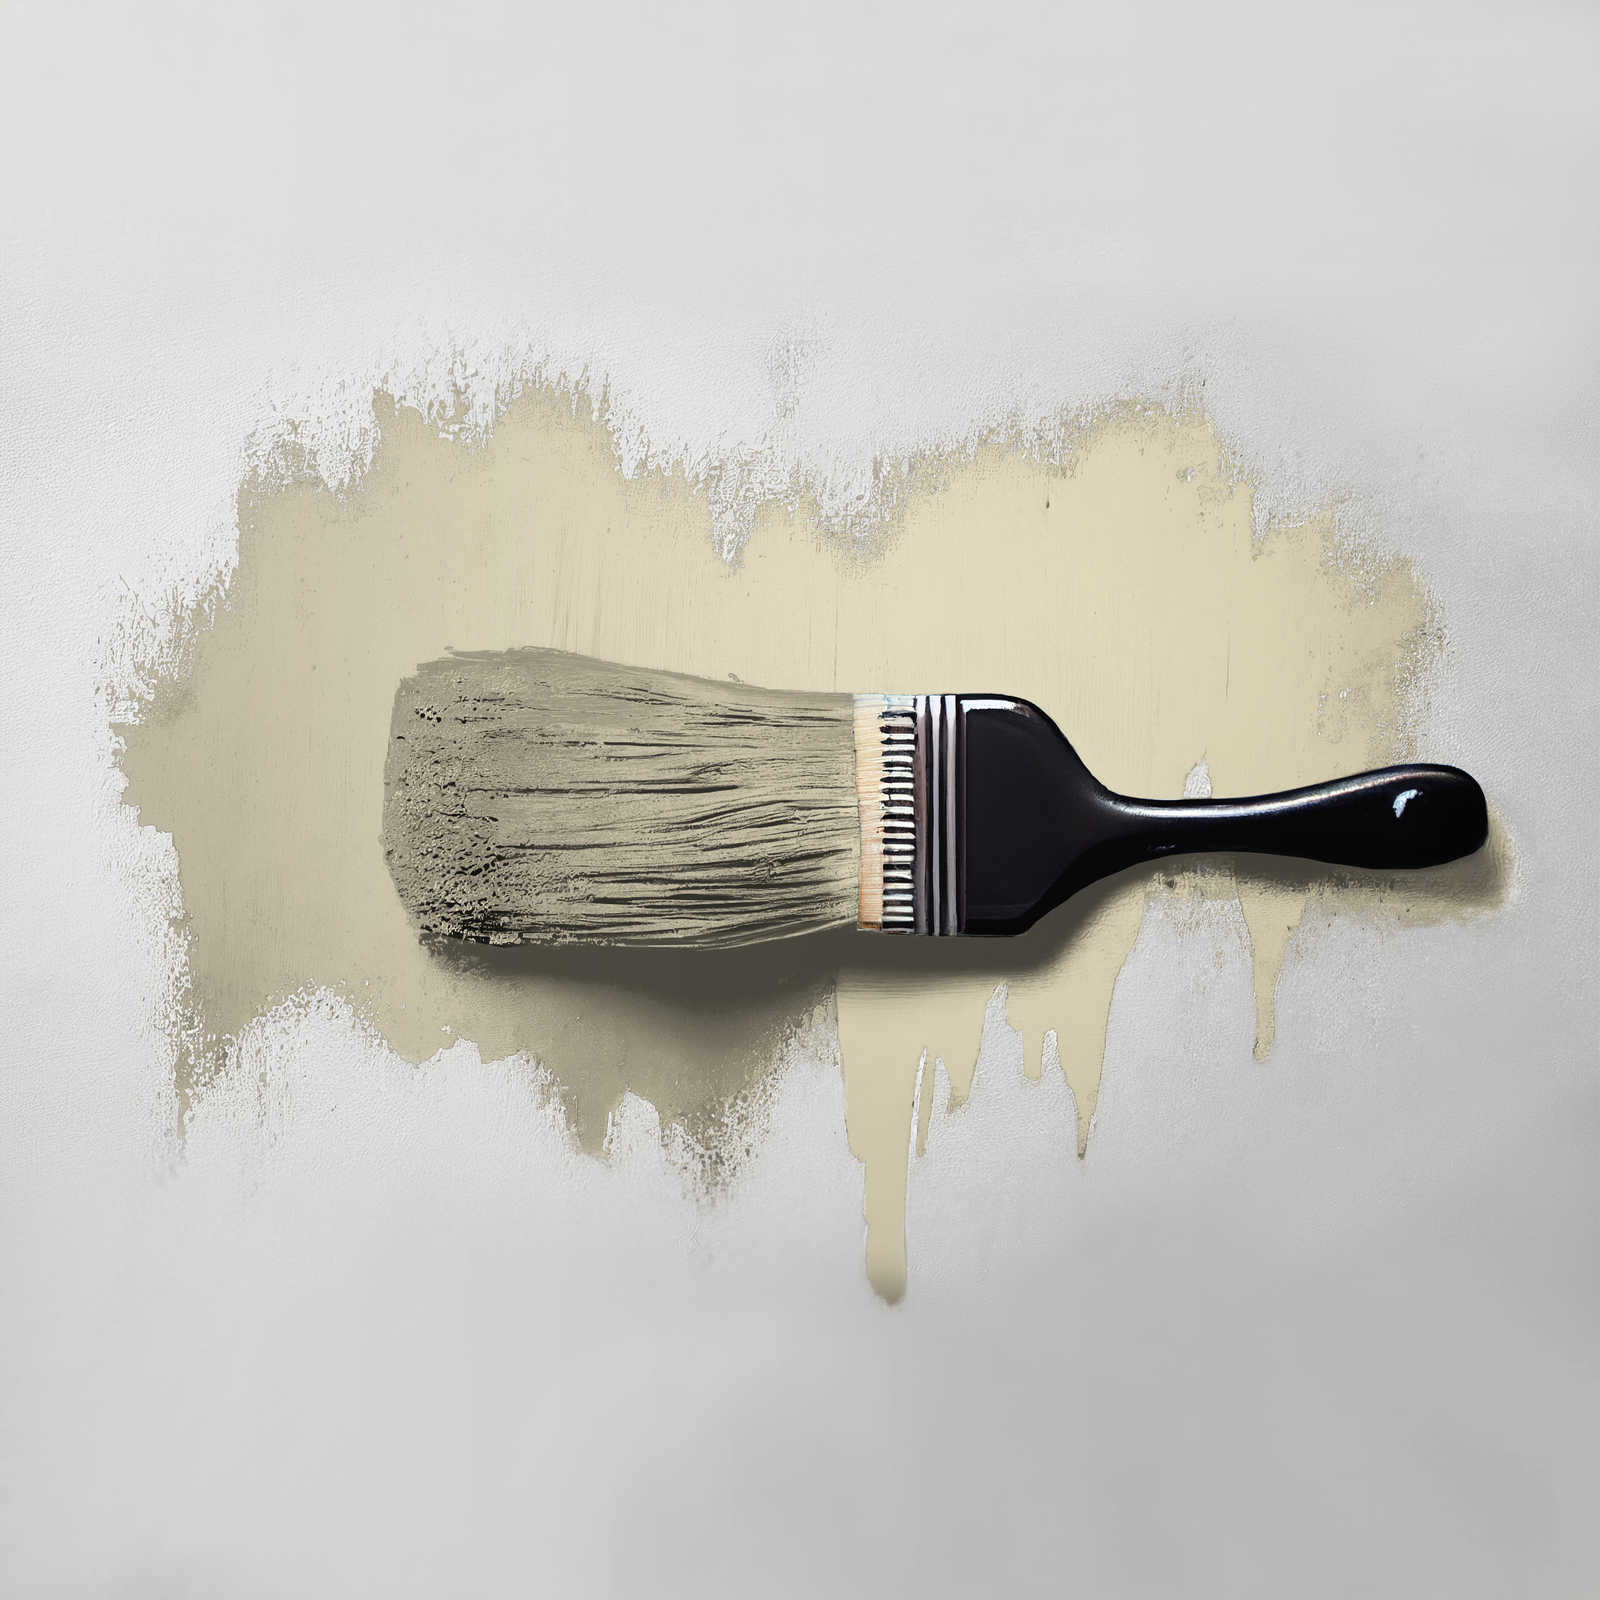             Pittura murale TCK4000 »Natural Mate« in beige chiaro verdastro – 2,5 litri
        